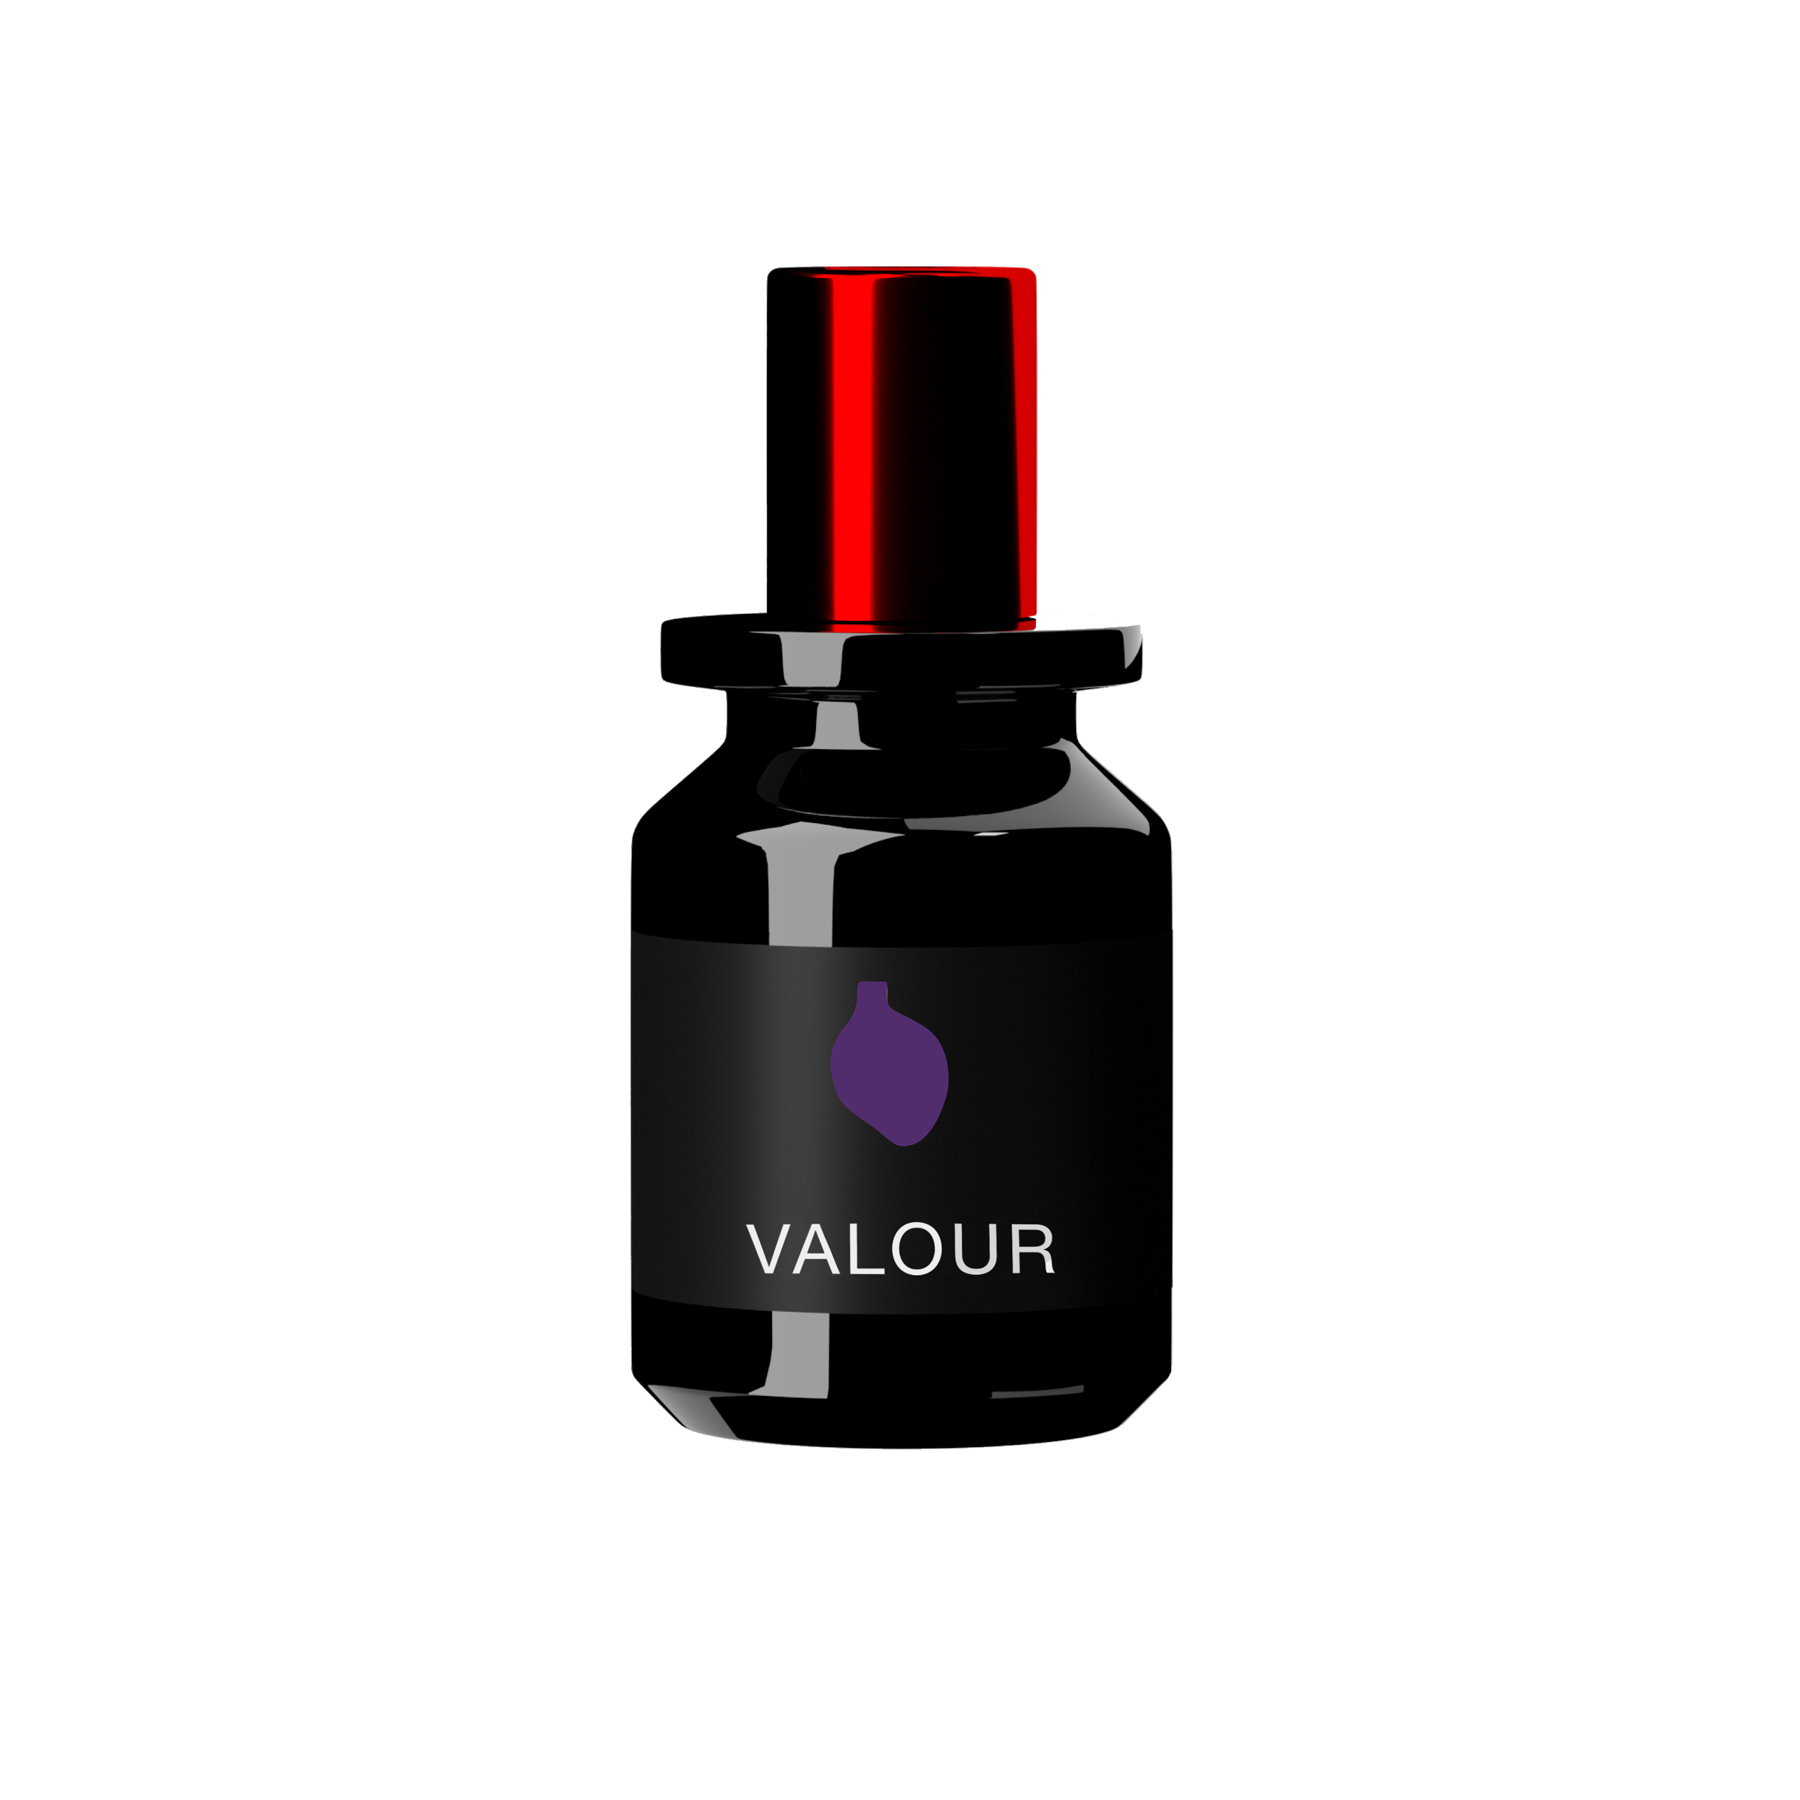 Valour V.5 30ml eau de parfum by Map of the Heart